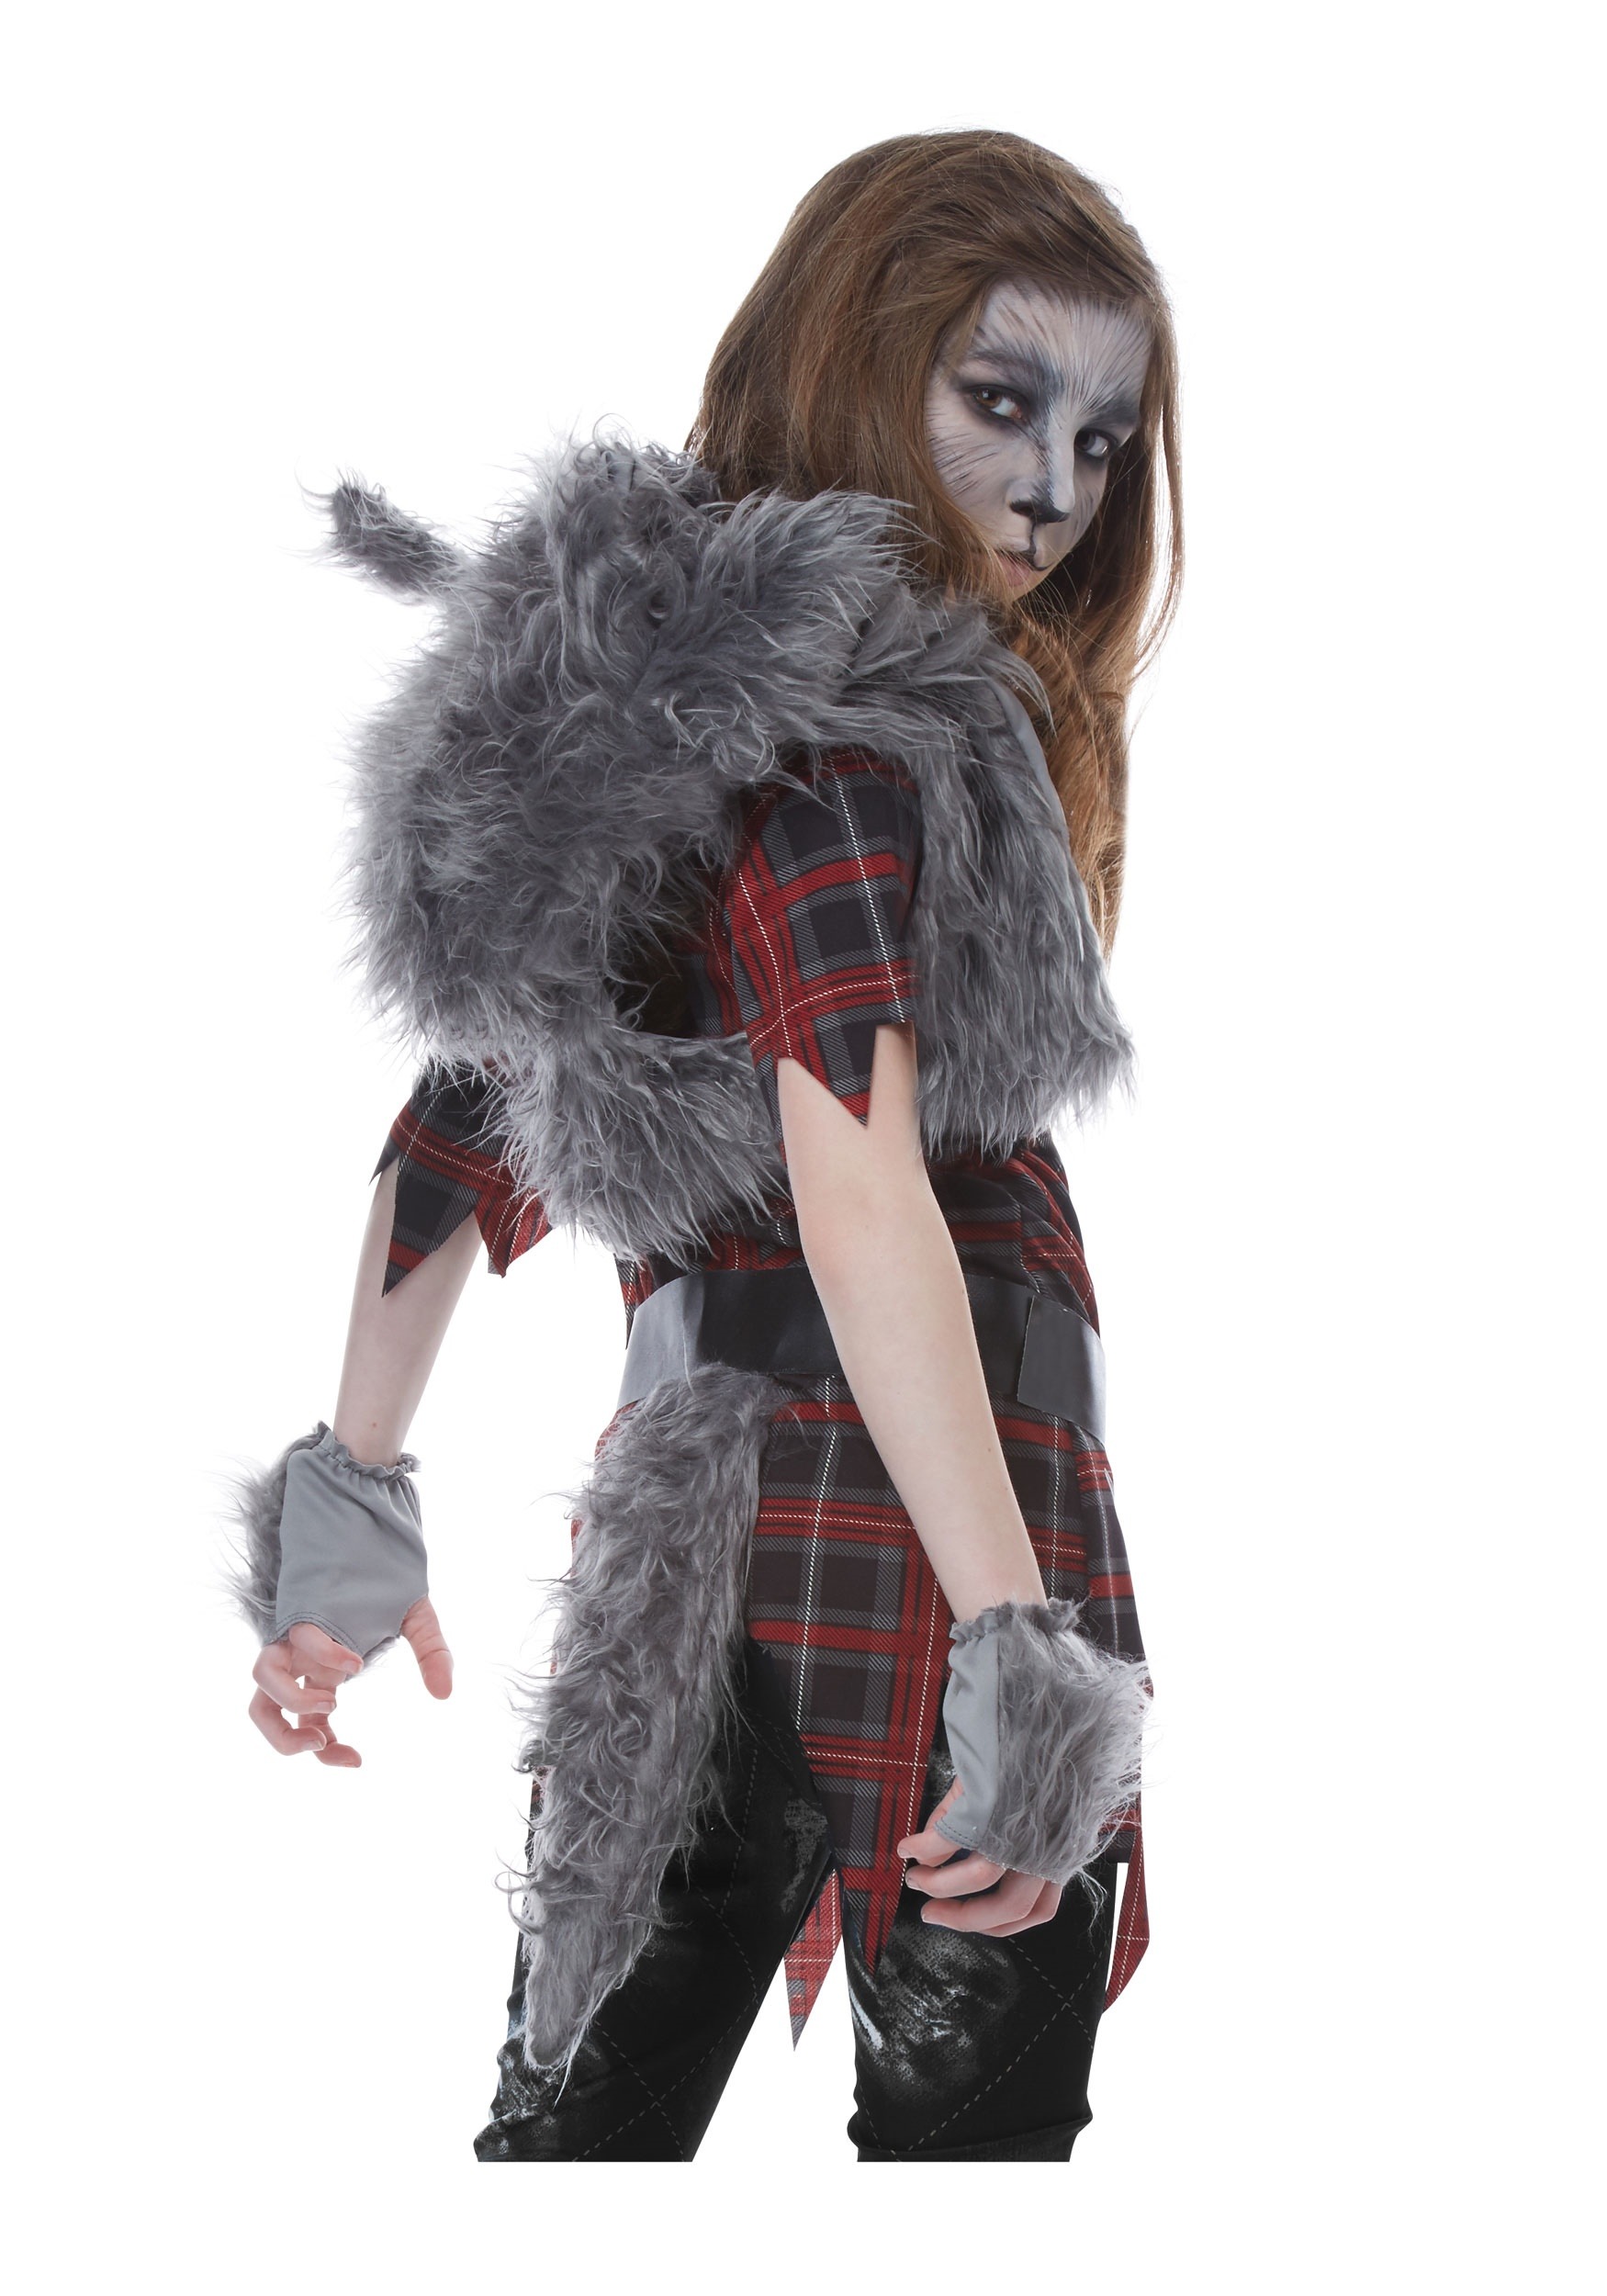 female werewolf costume ideas